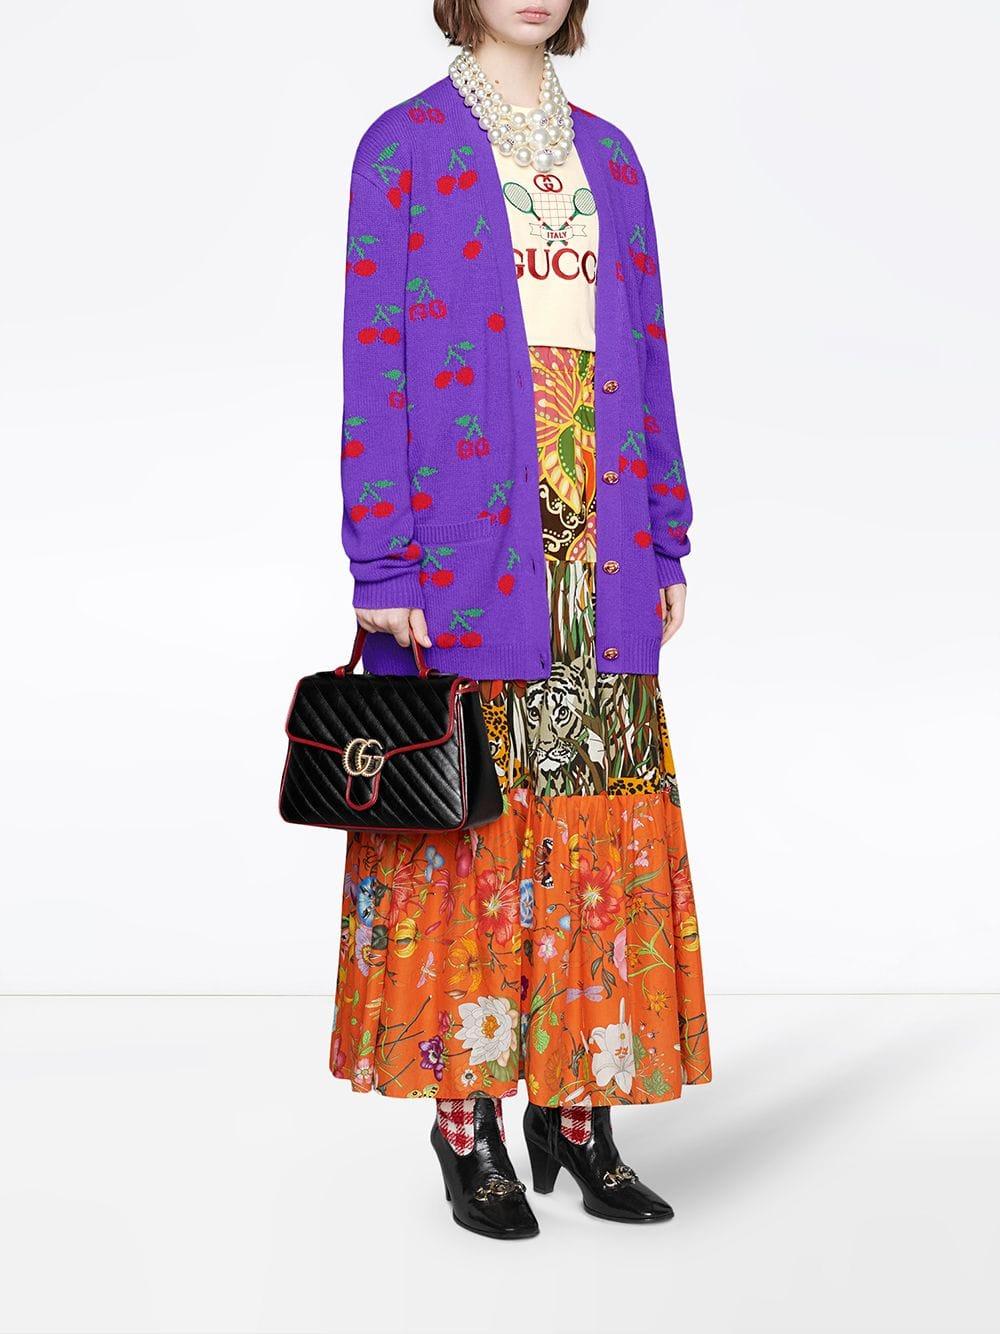 Gucci GG Cherry Jacquard Wool Knit Cardigan in Purple - Lyst